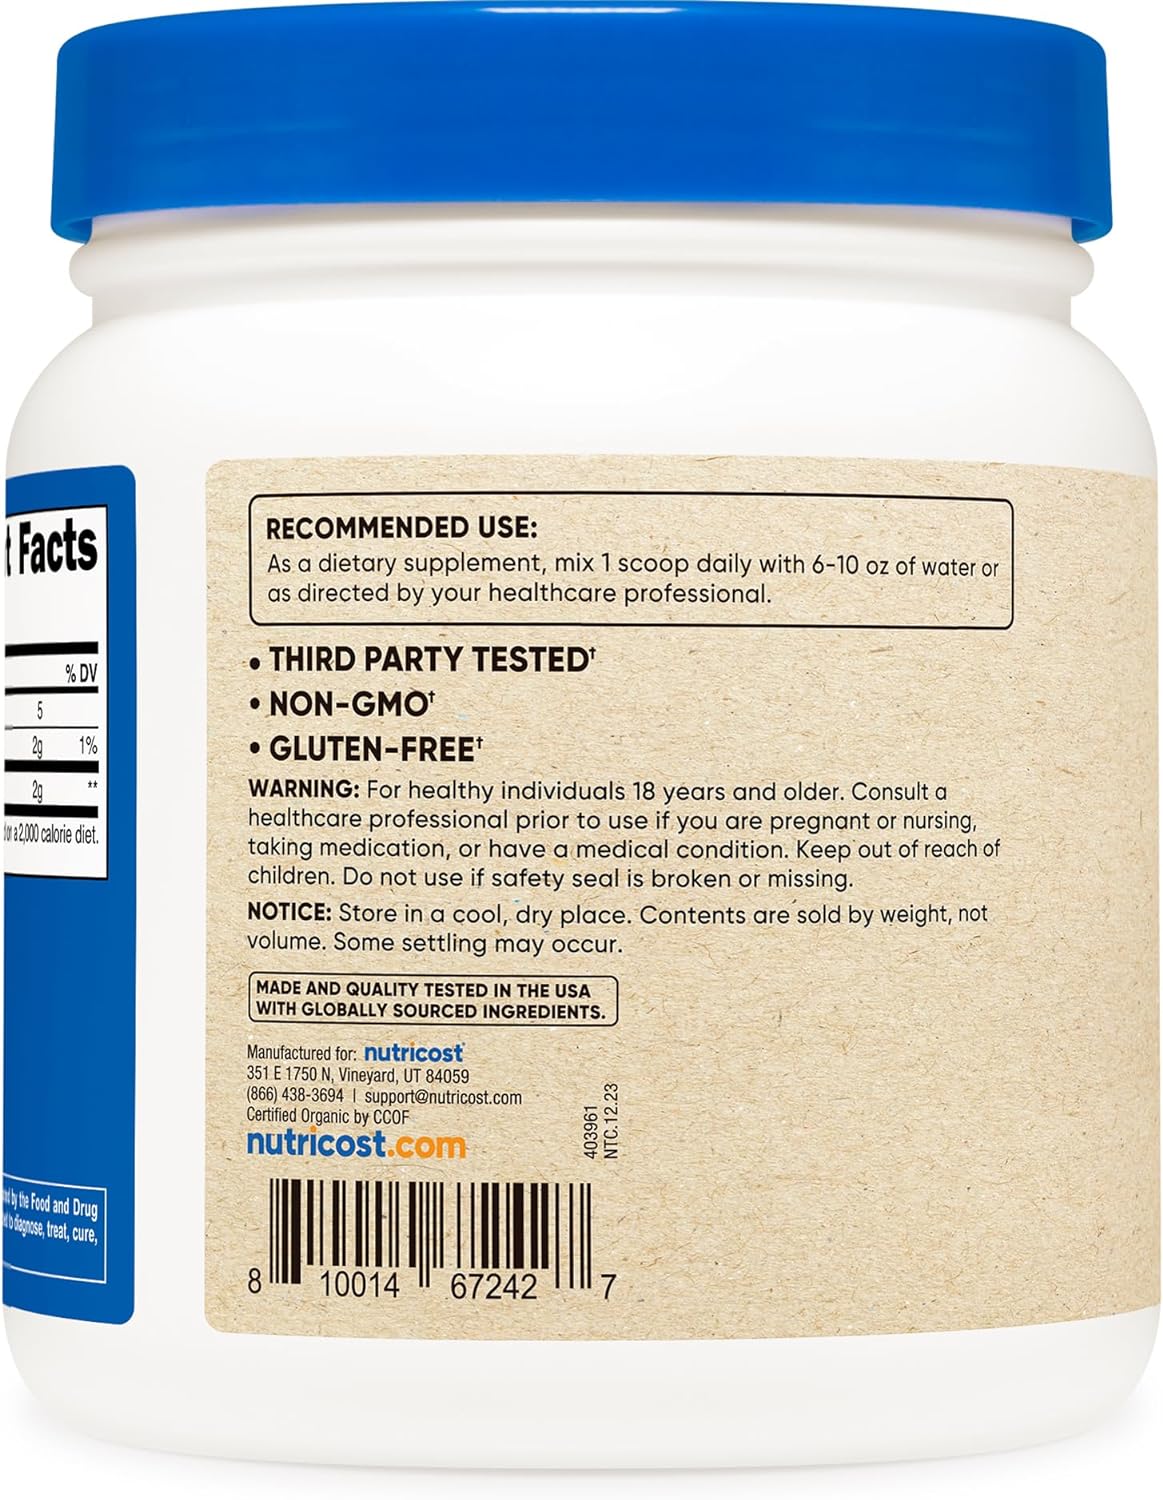 Nutricost Organic Turmeric Root Powder 1 LB (16oz) - Certified USDA Organic, Food Grade, Gluten Free, Non-GMO